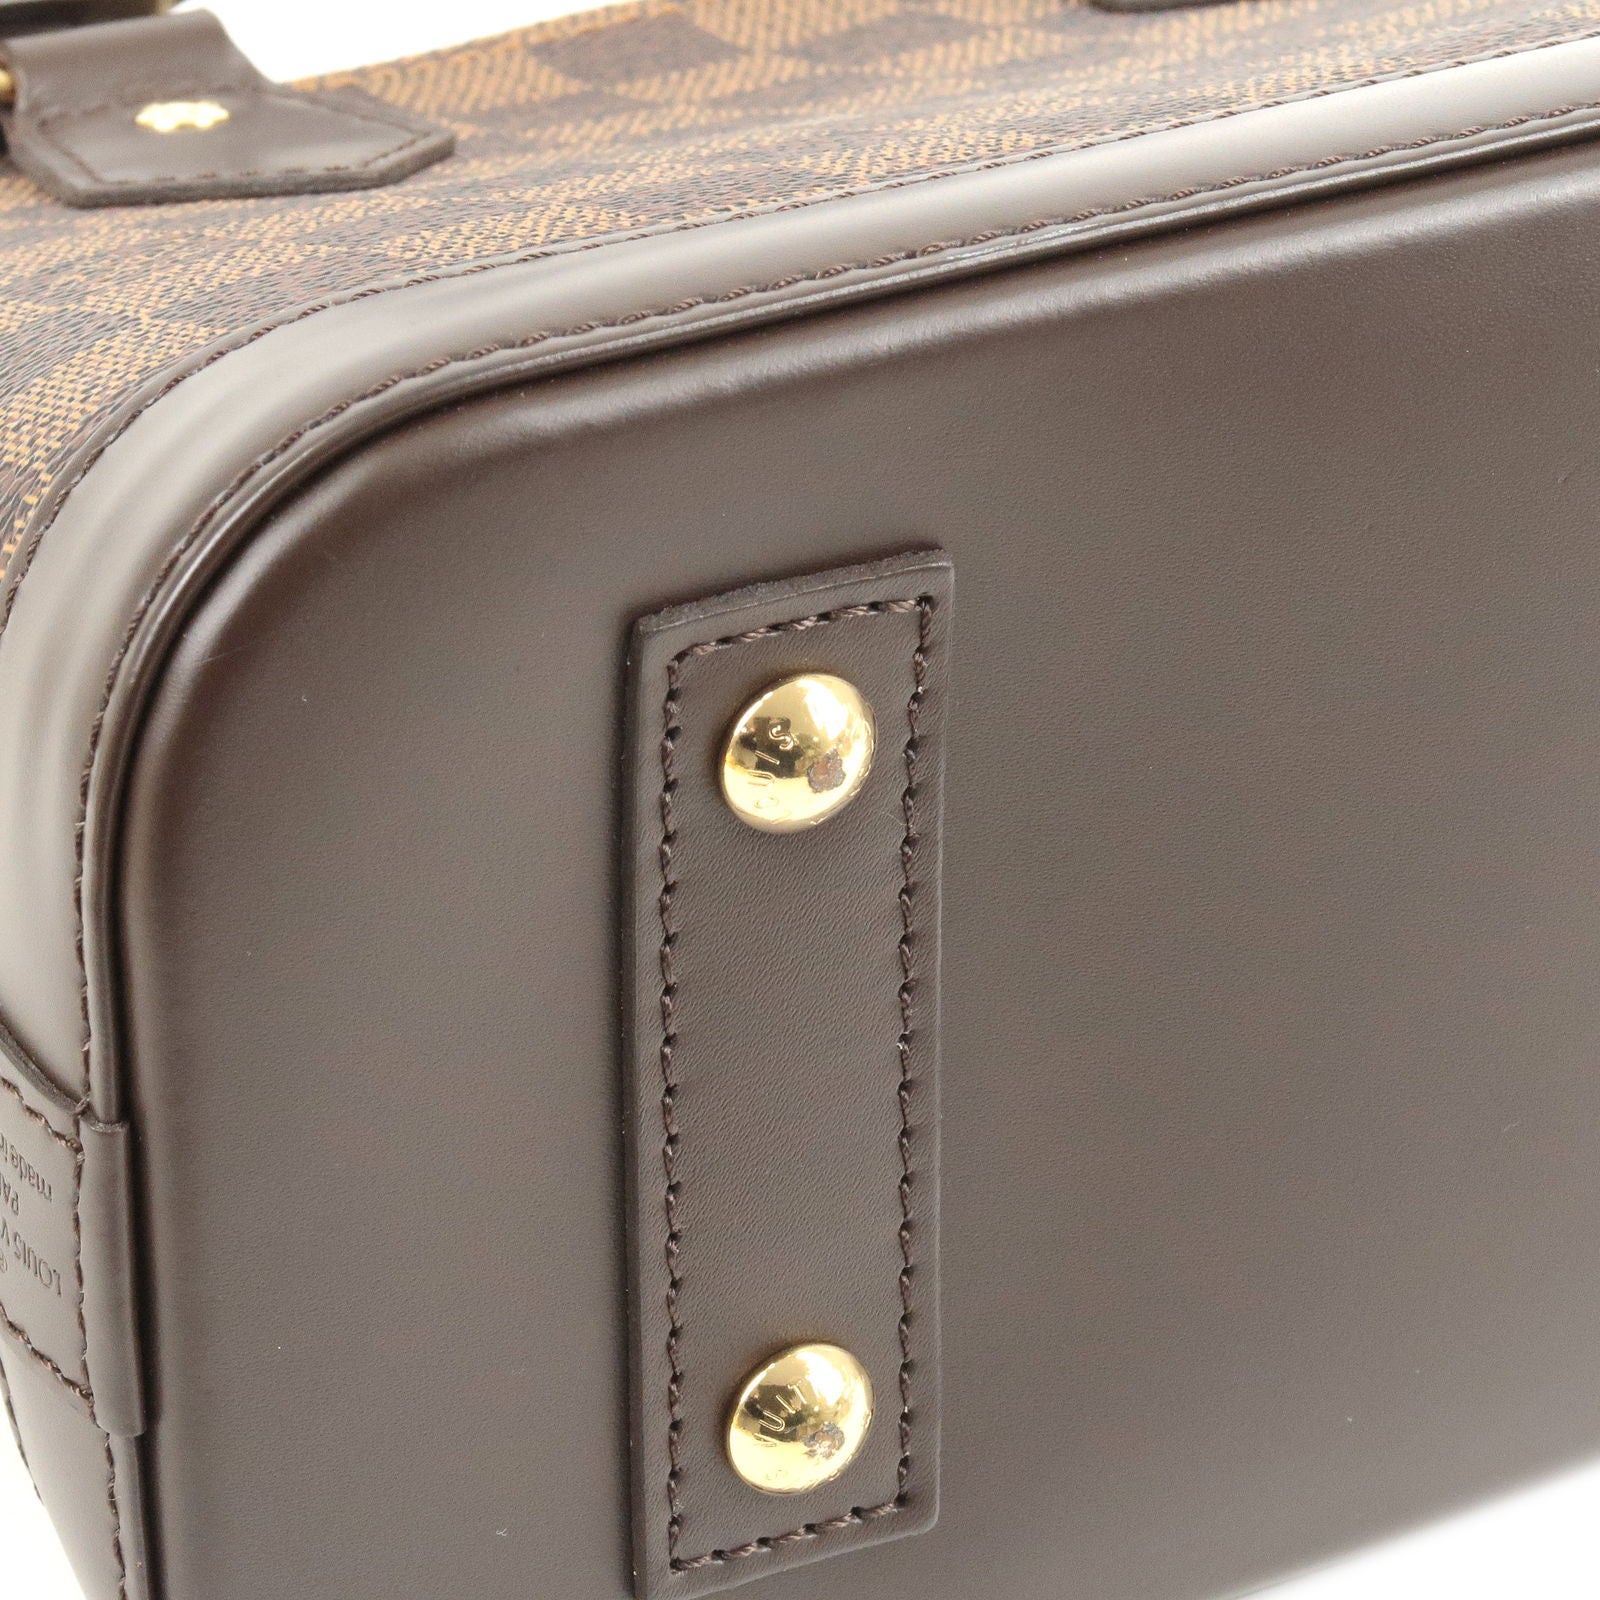 Alma BB - Luxury Shoulder Bags and Cross-Body Bags - Handbags, Women  N41221